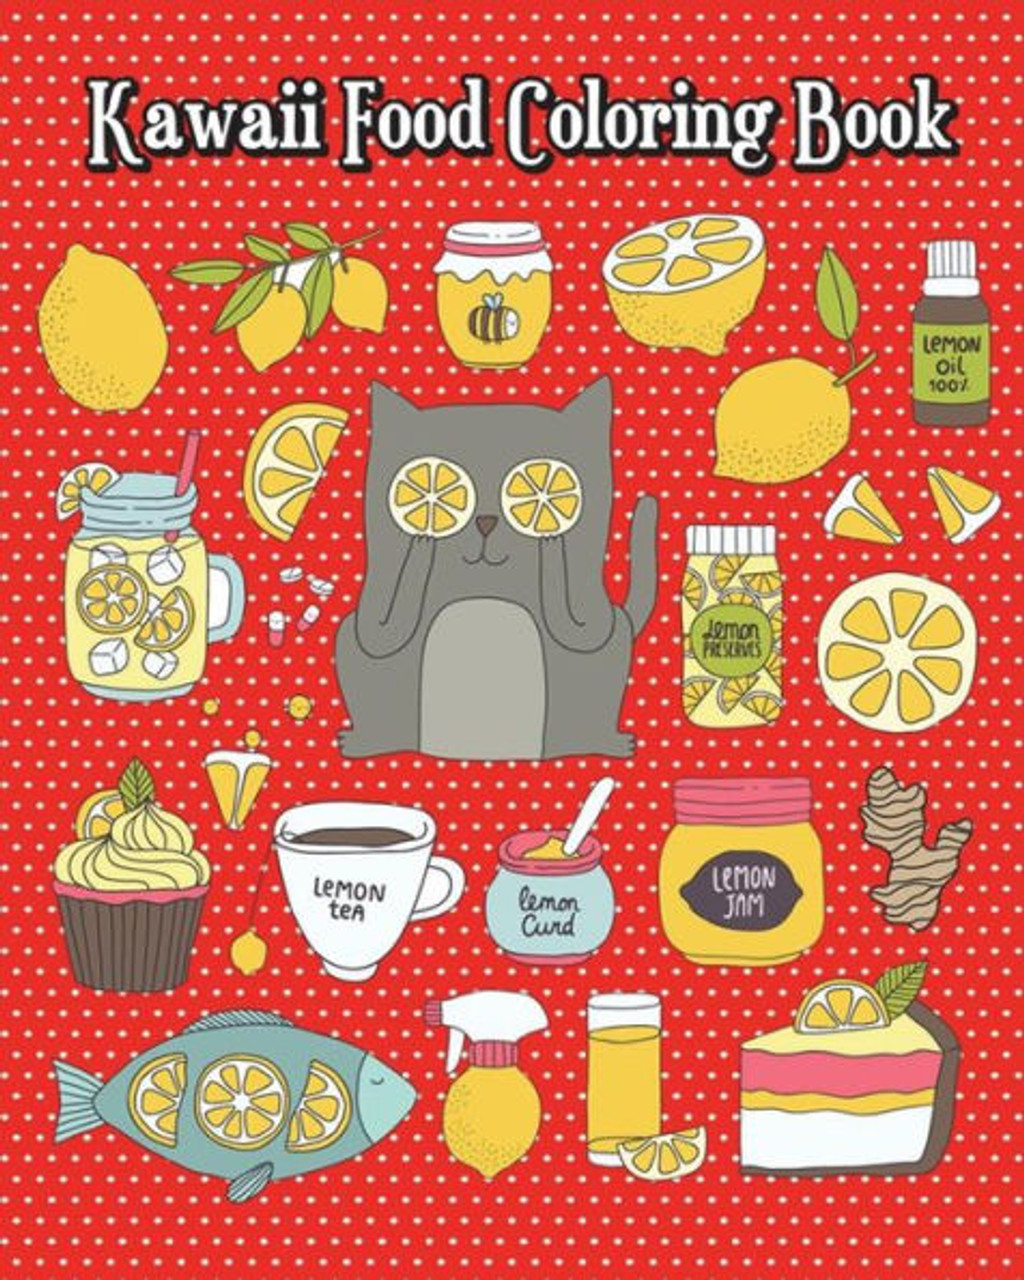 Kawaii food coloring book simple and cute food drawings pizza hamburger cake and more plus fun activities for kids